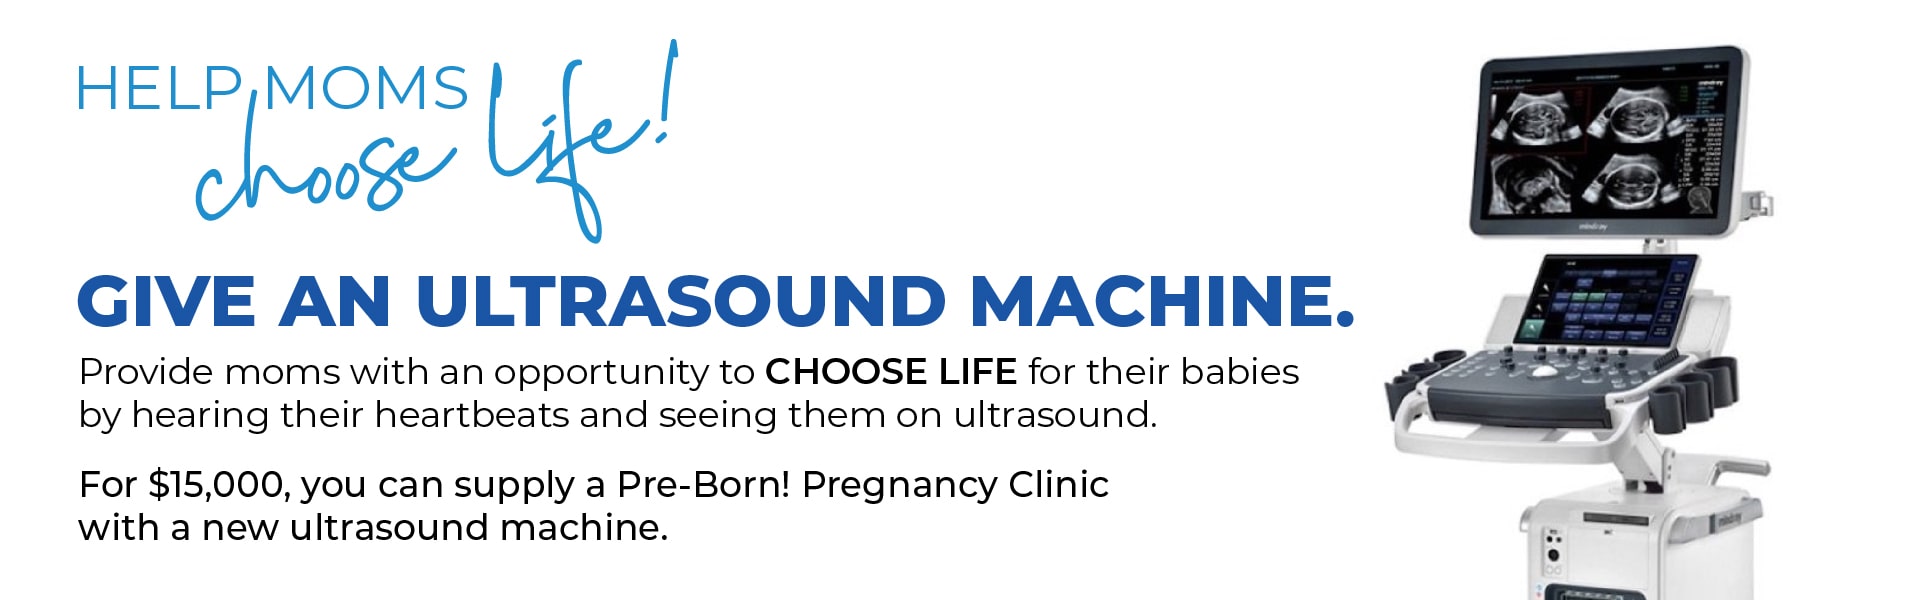 Help Mom's Choose Life Give an Ultrasound Machine